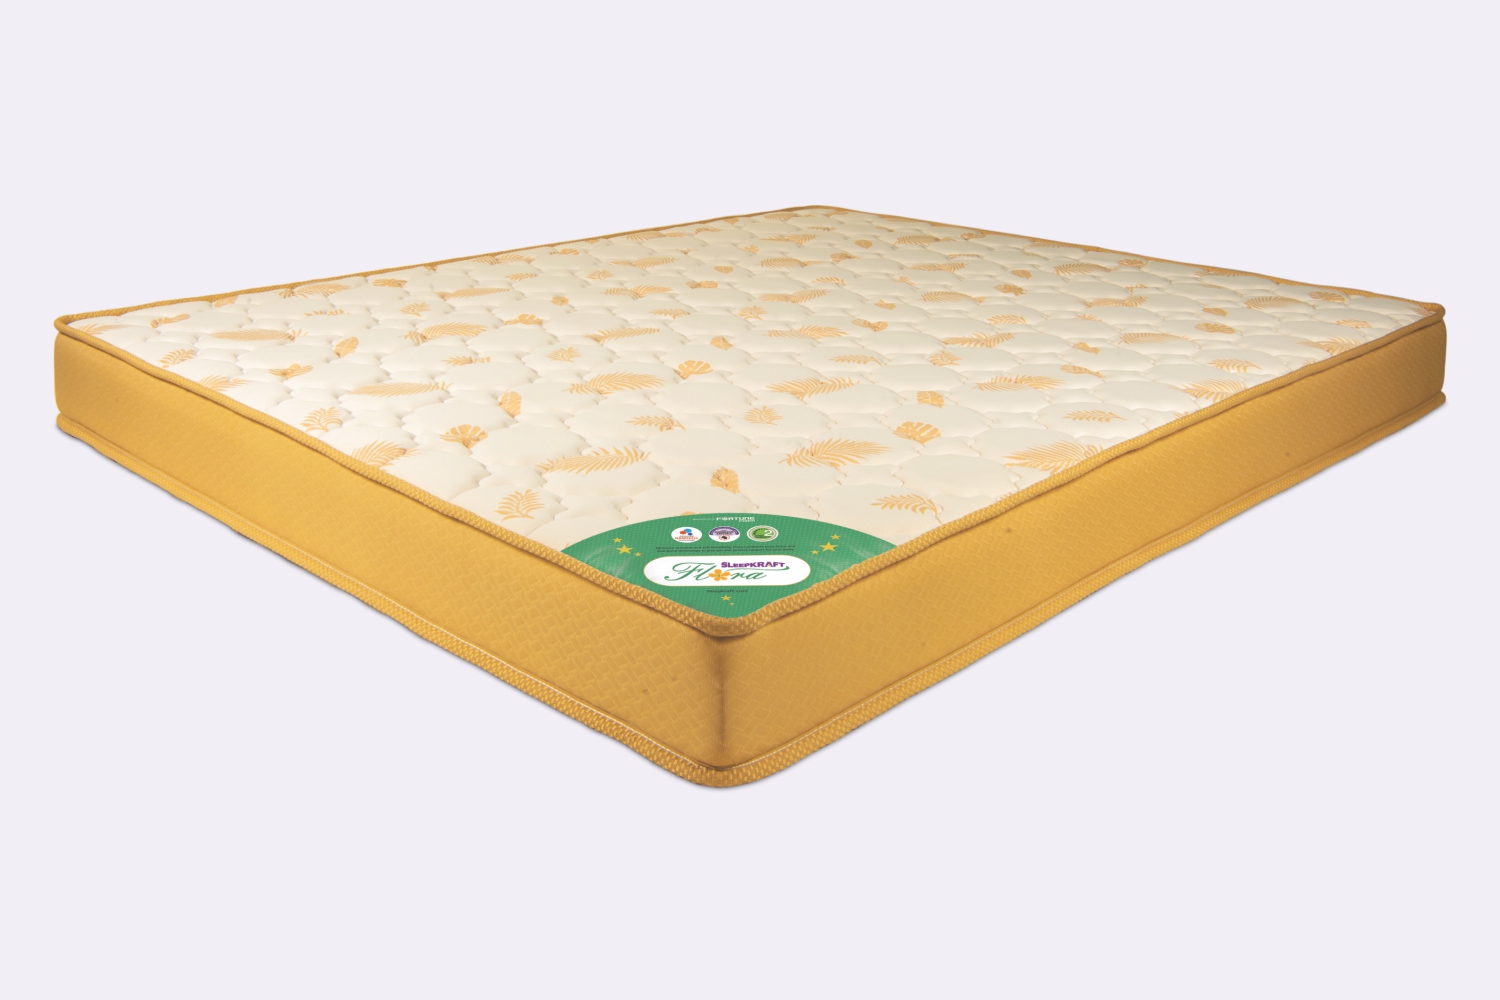 century flexi bond foam mattress price